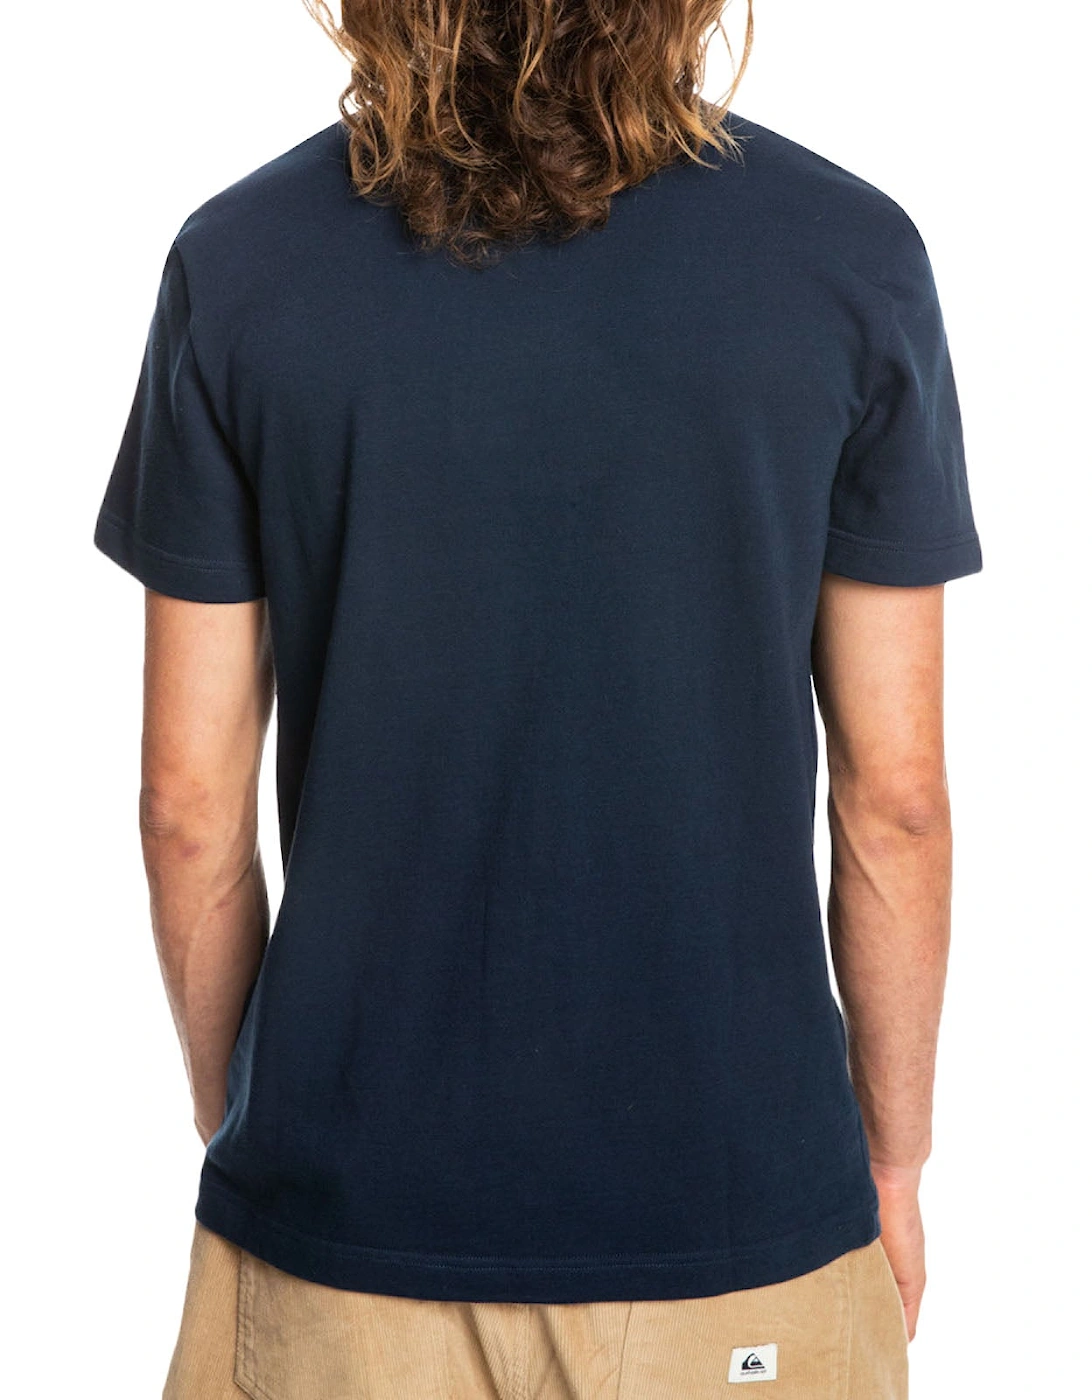 Mens Transat Placement Short Sleeve T-Shirt - Navy Blazer